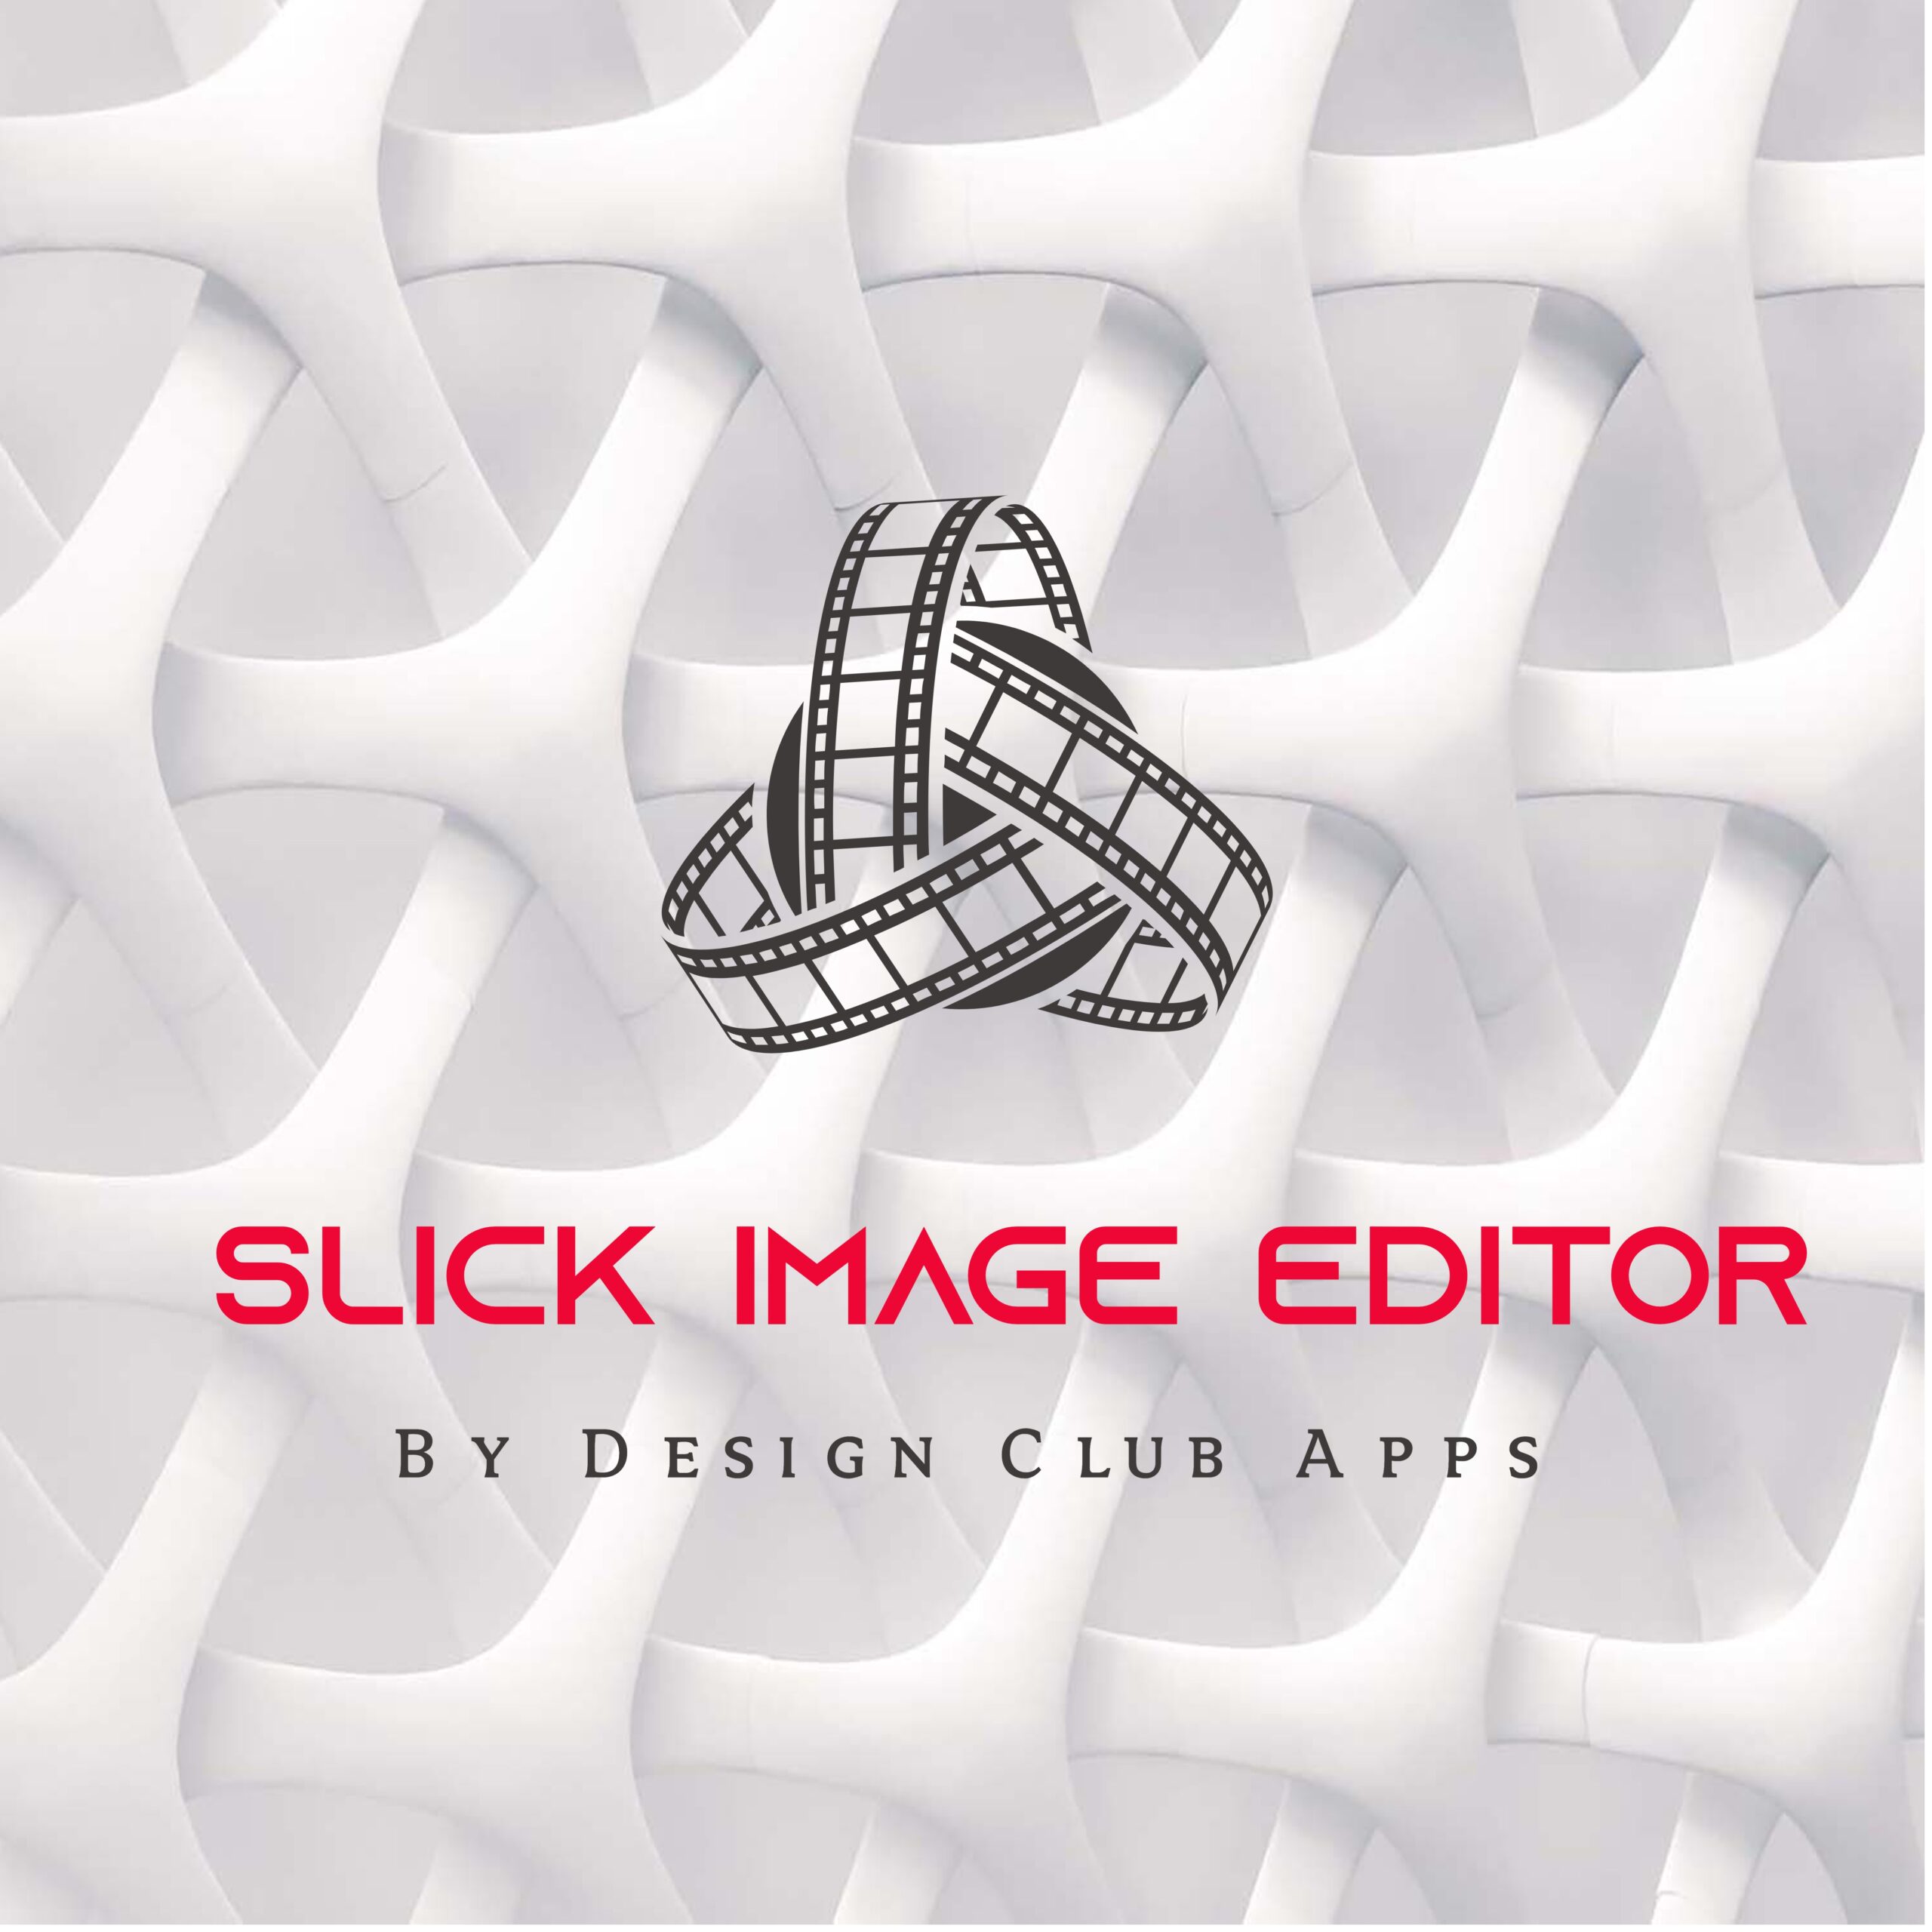 Slick Image Editor